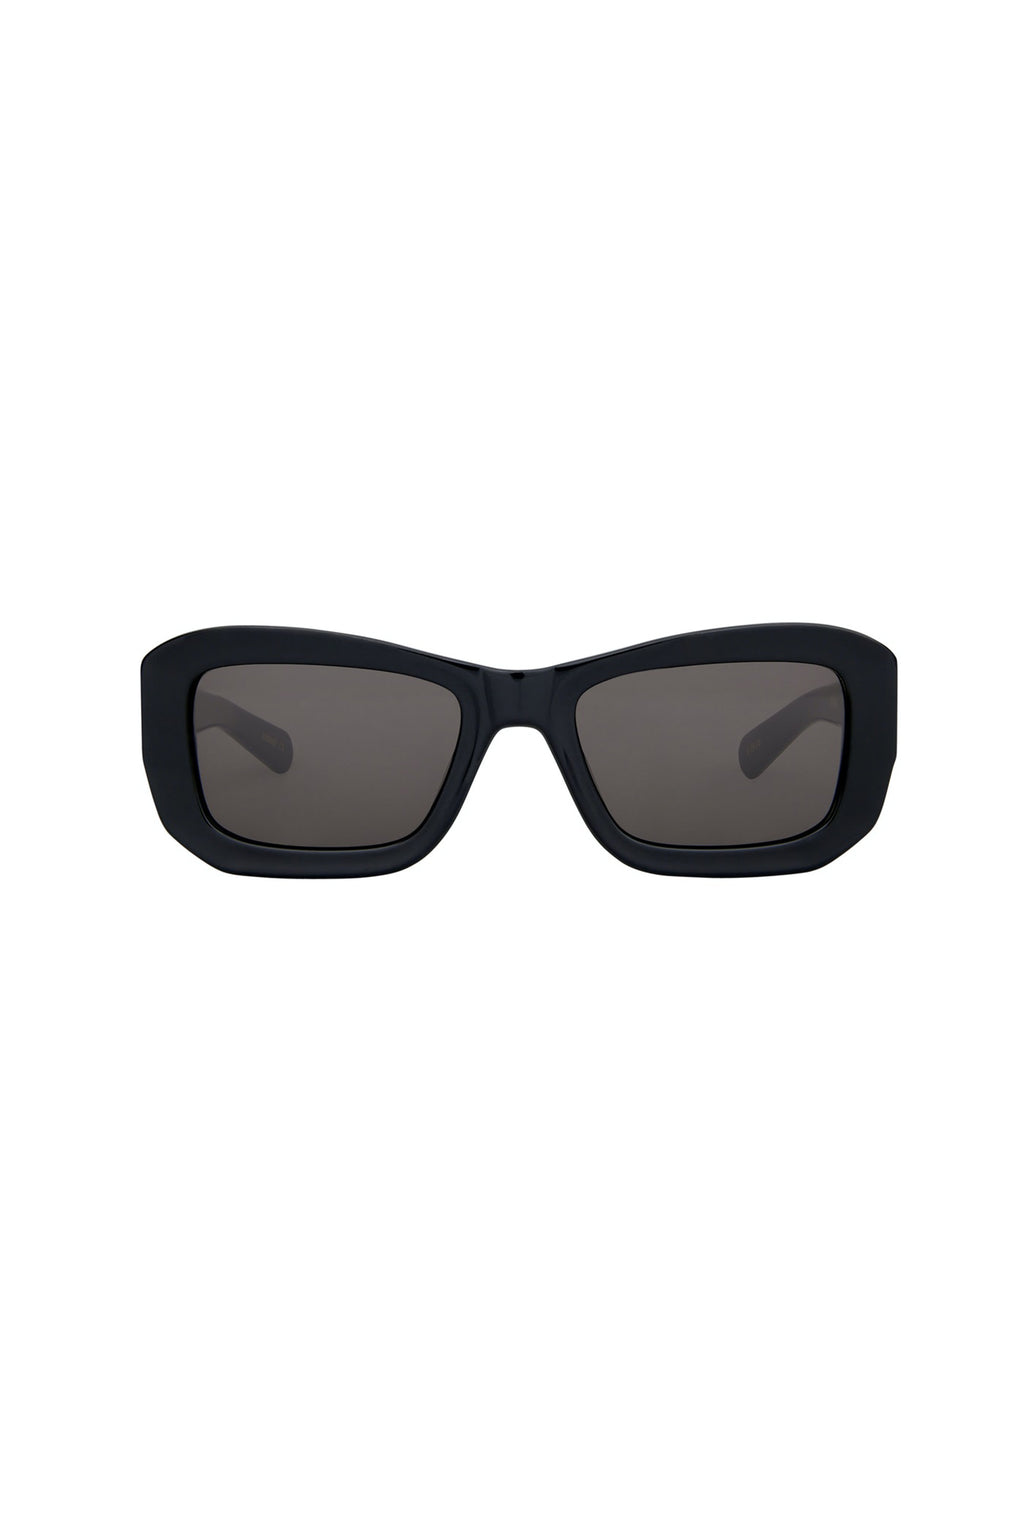 Flatlist Eyewear - Norma Solid Black/Solid Black Lens